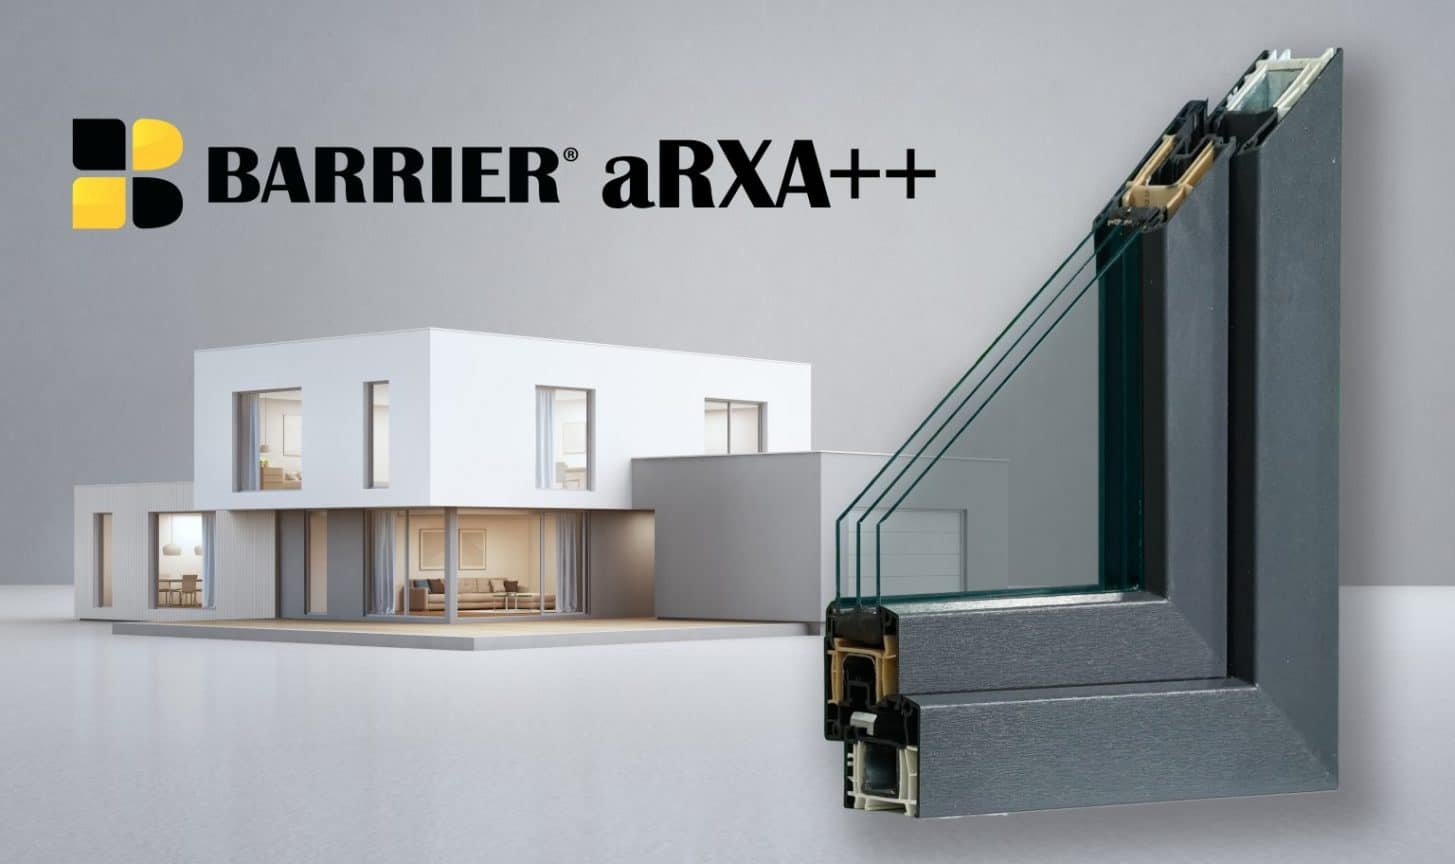 Barrier aRXA++